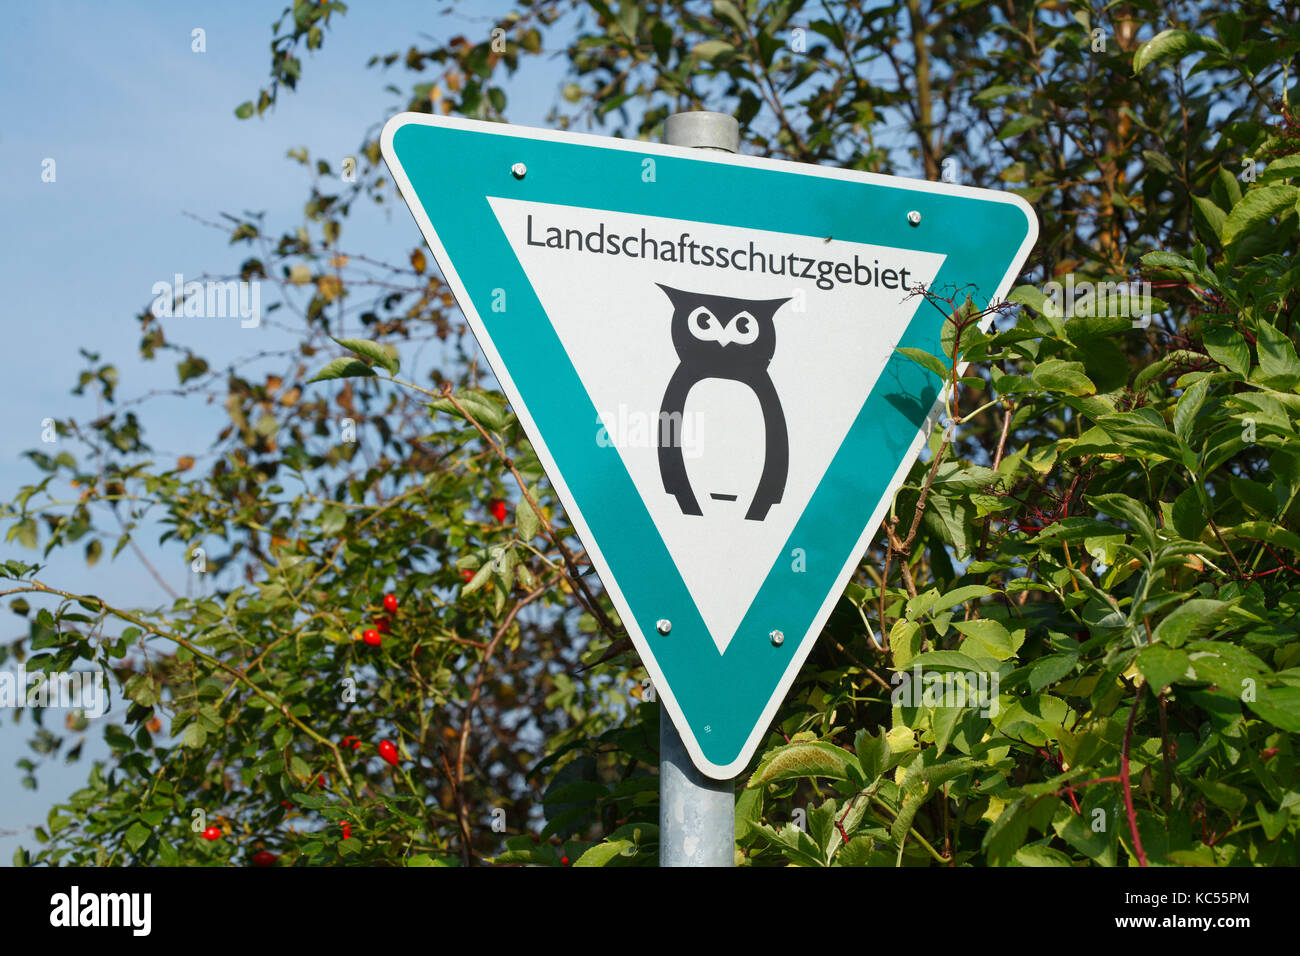 Landscape conservation area sign, Bremen, Germany Stock Photo